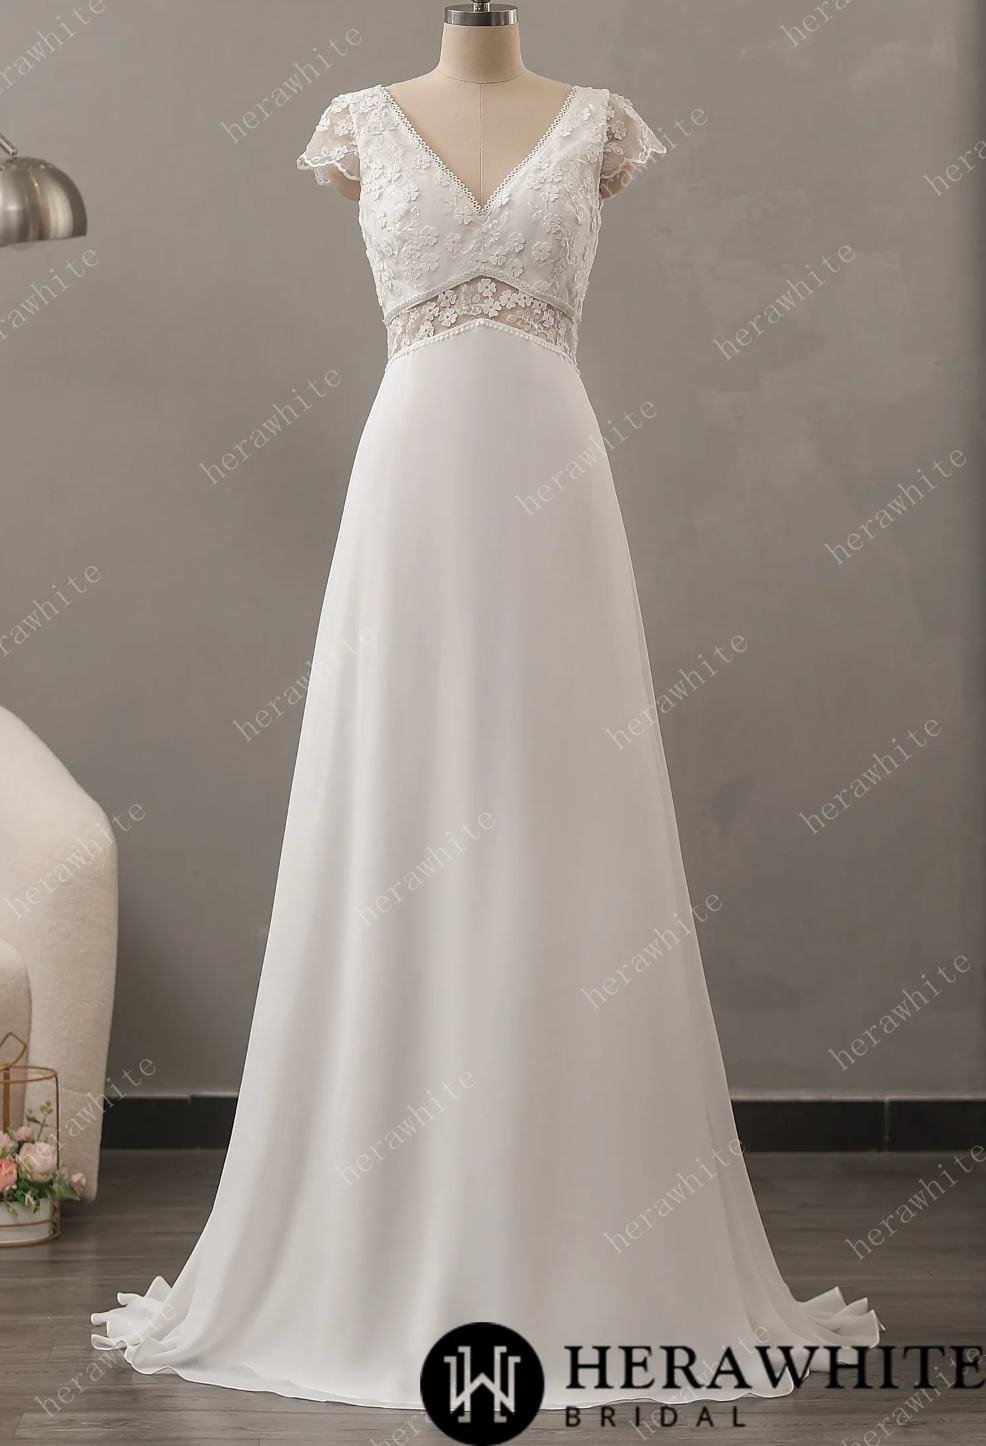 Illusion Floral Lace Wedding Dress with Chiffon Skirt